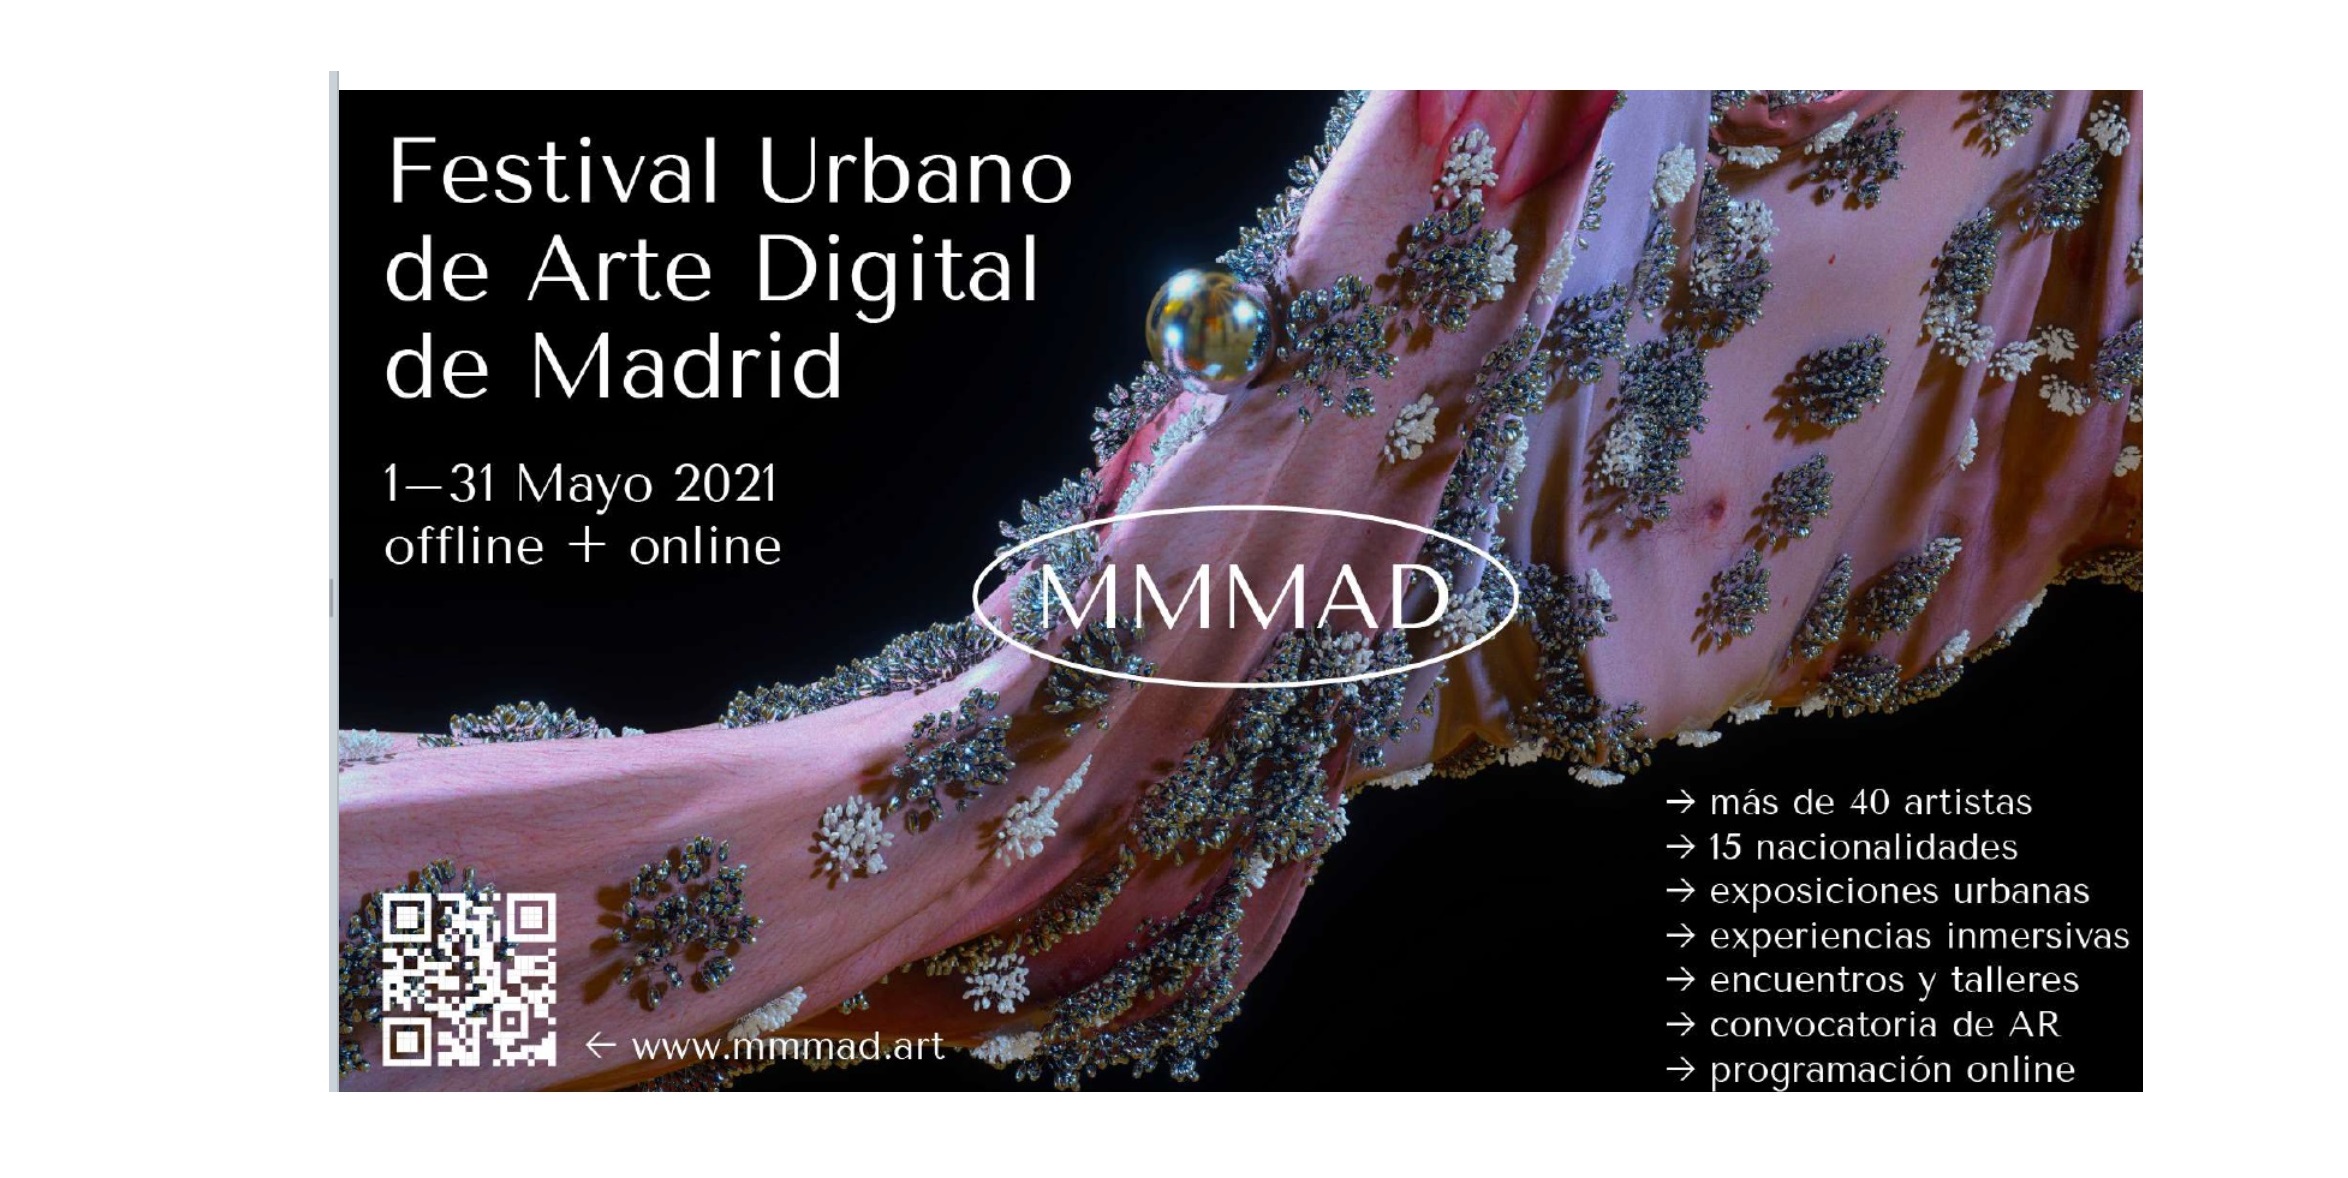 festival urbano, arte digita, madrid, MMMAD, jcdecaux, 31 mayo ,2021,programapublicidad